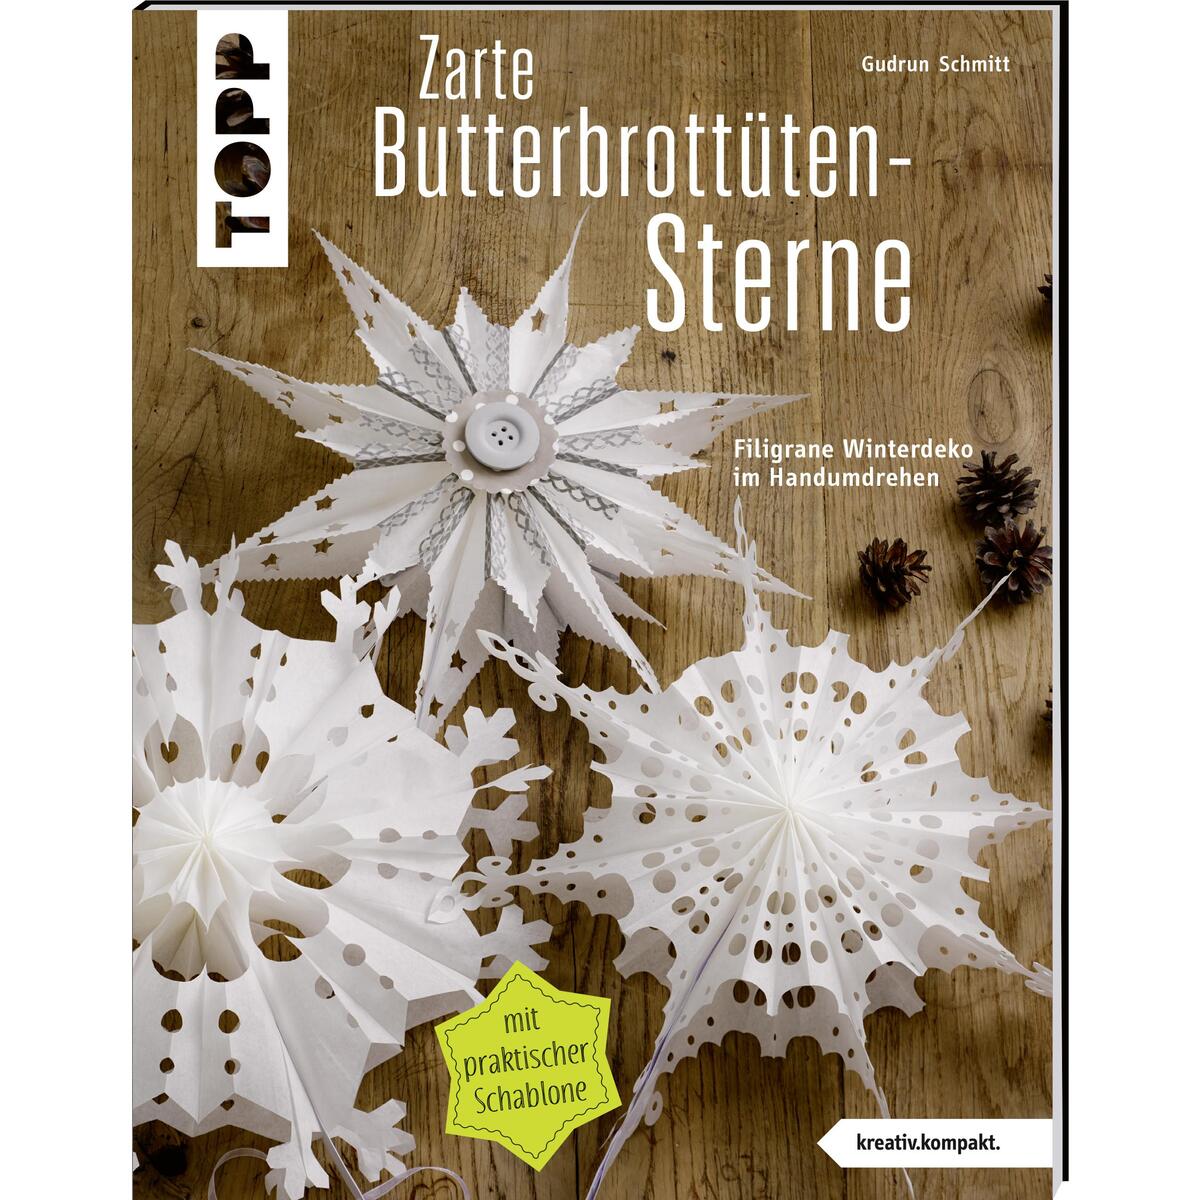 Zarte Butterbrottütensterne (kreativ.kompakt.) von Frech Verlag GmbH